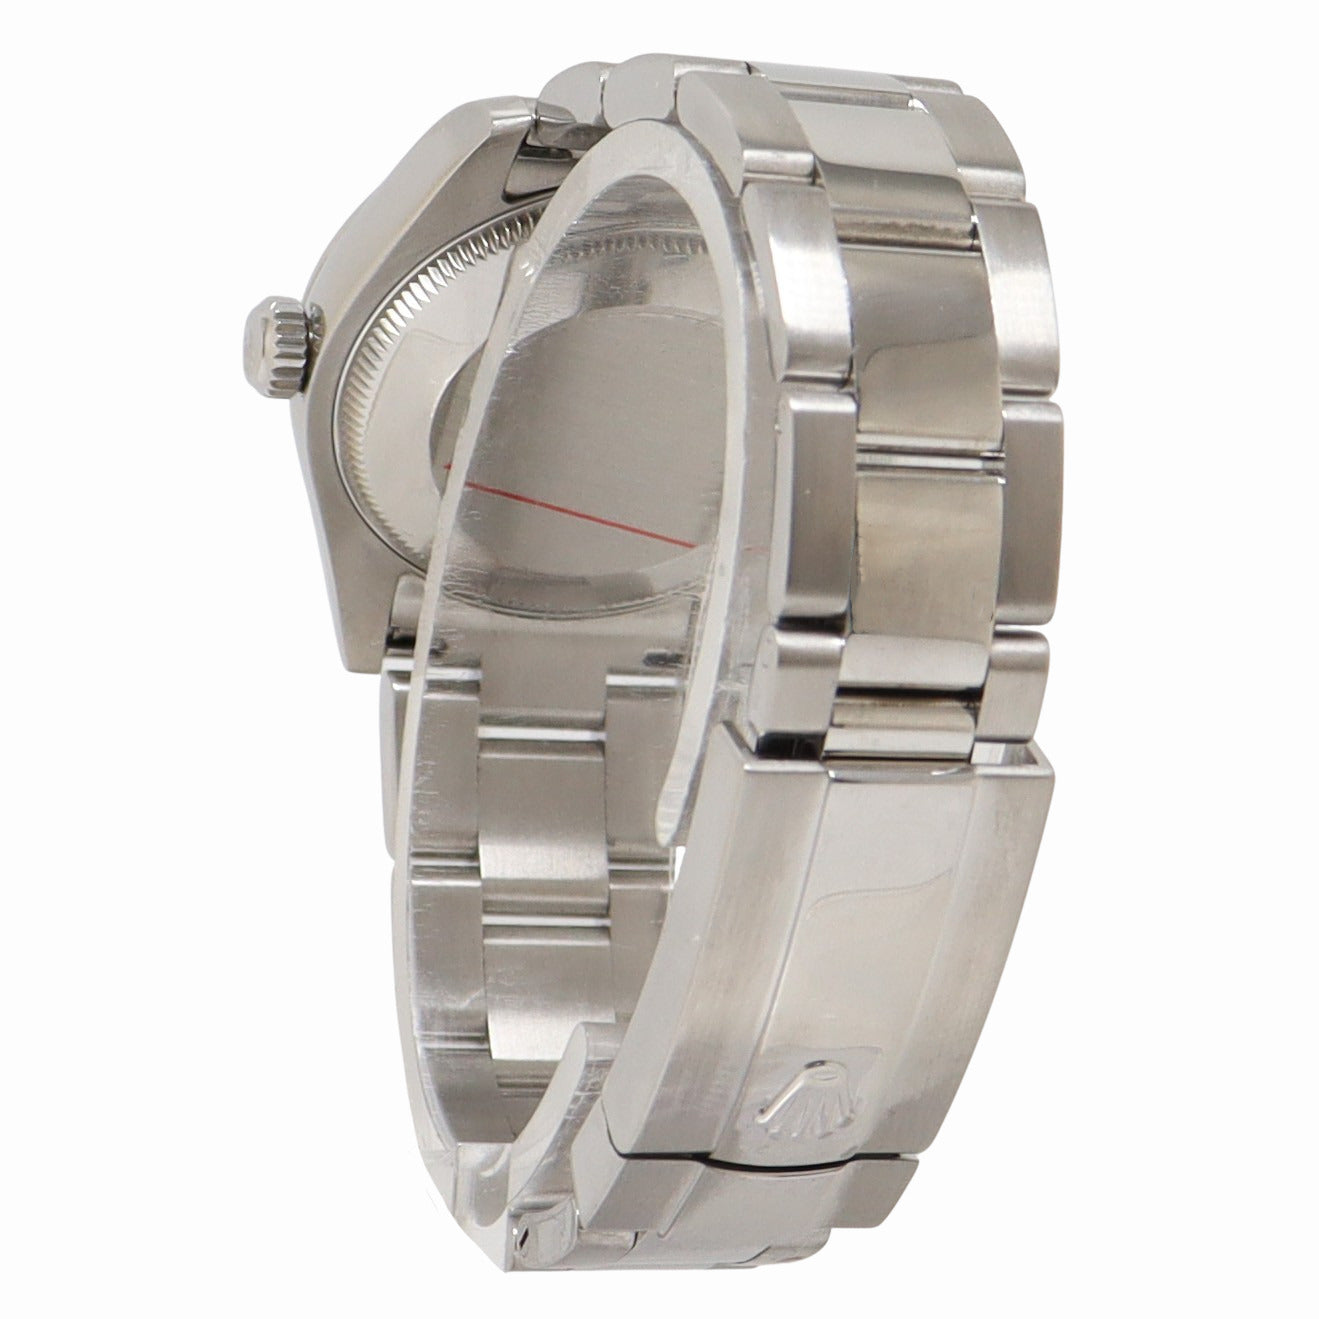 Rolex Datejust Stainless Steel 31mm Black Stick Dial Watch Reference #: 178240 - Happy Jewelers Fine Jewelry Lifetime Warranty